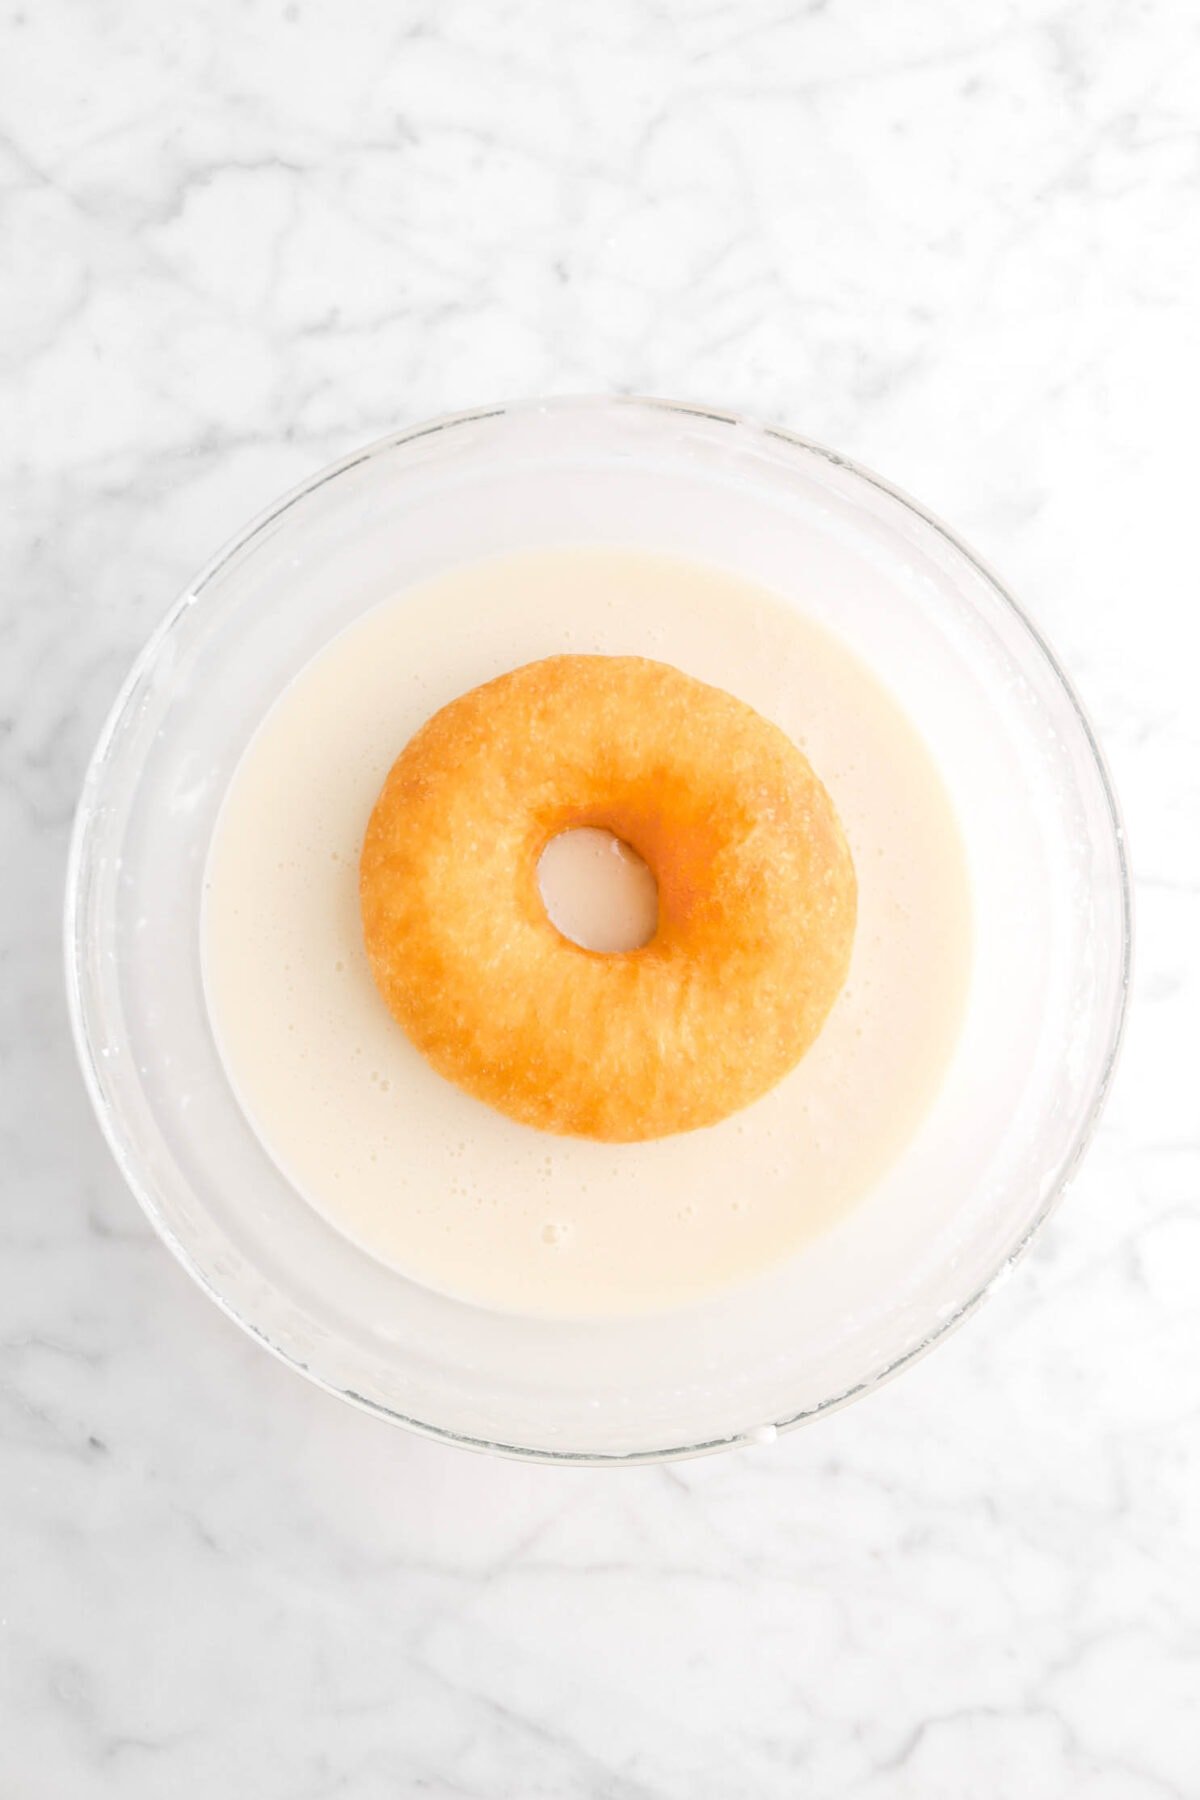 doughnut in glaze in glass bowl